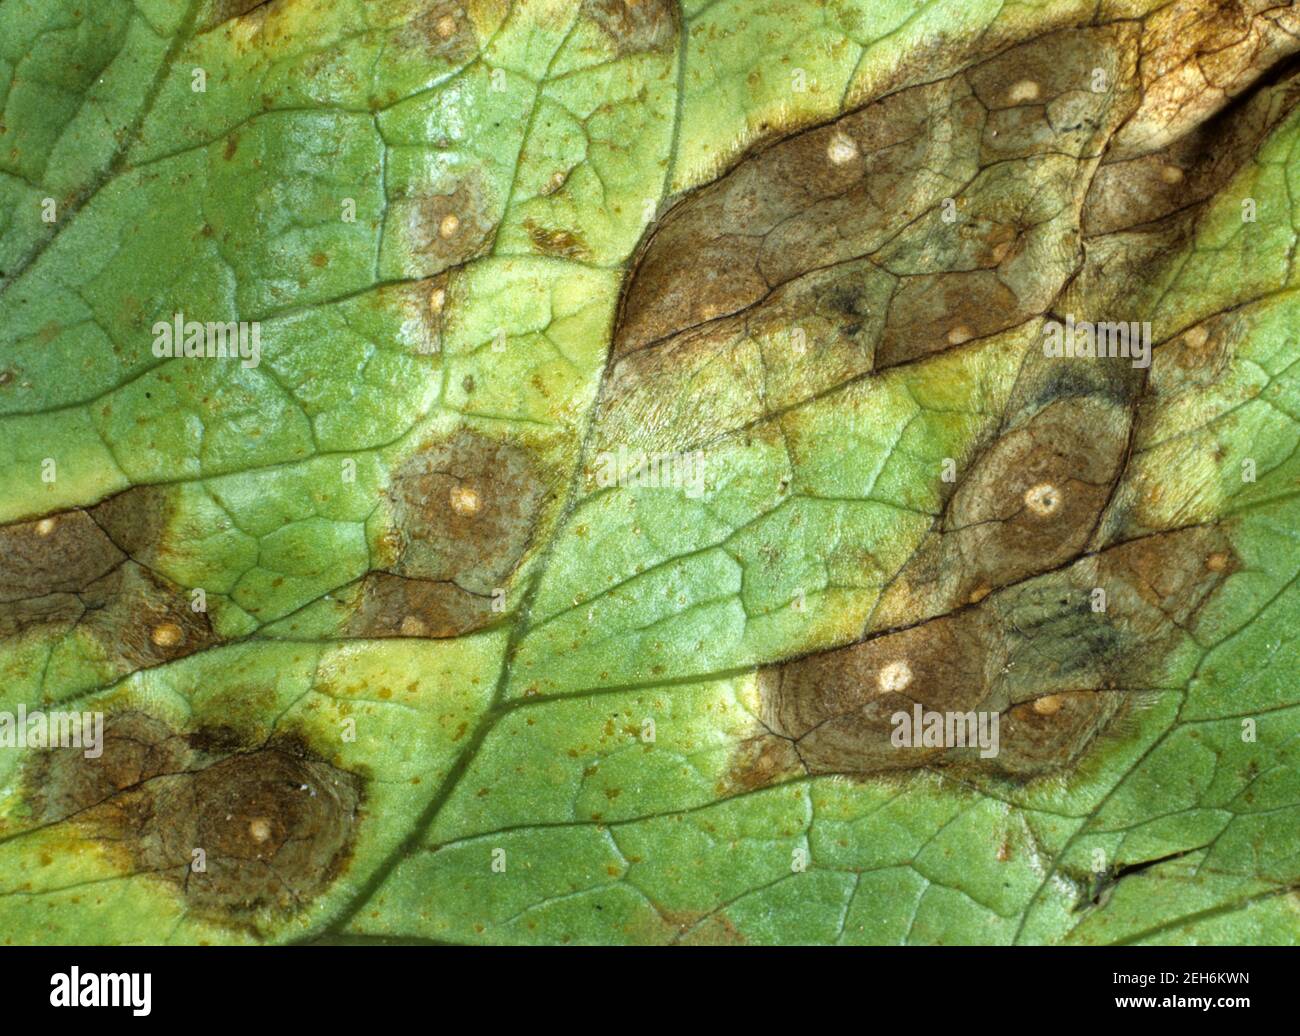 Leaf spot (Cercospora lactucae-sativae) necrotic 'eye-spot' leaf lesions on lettuce, Thailand Stock Photo